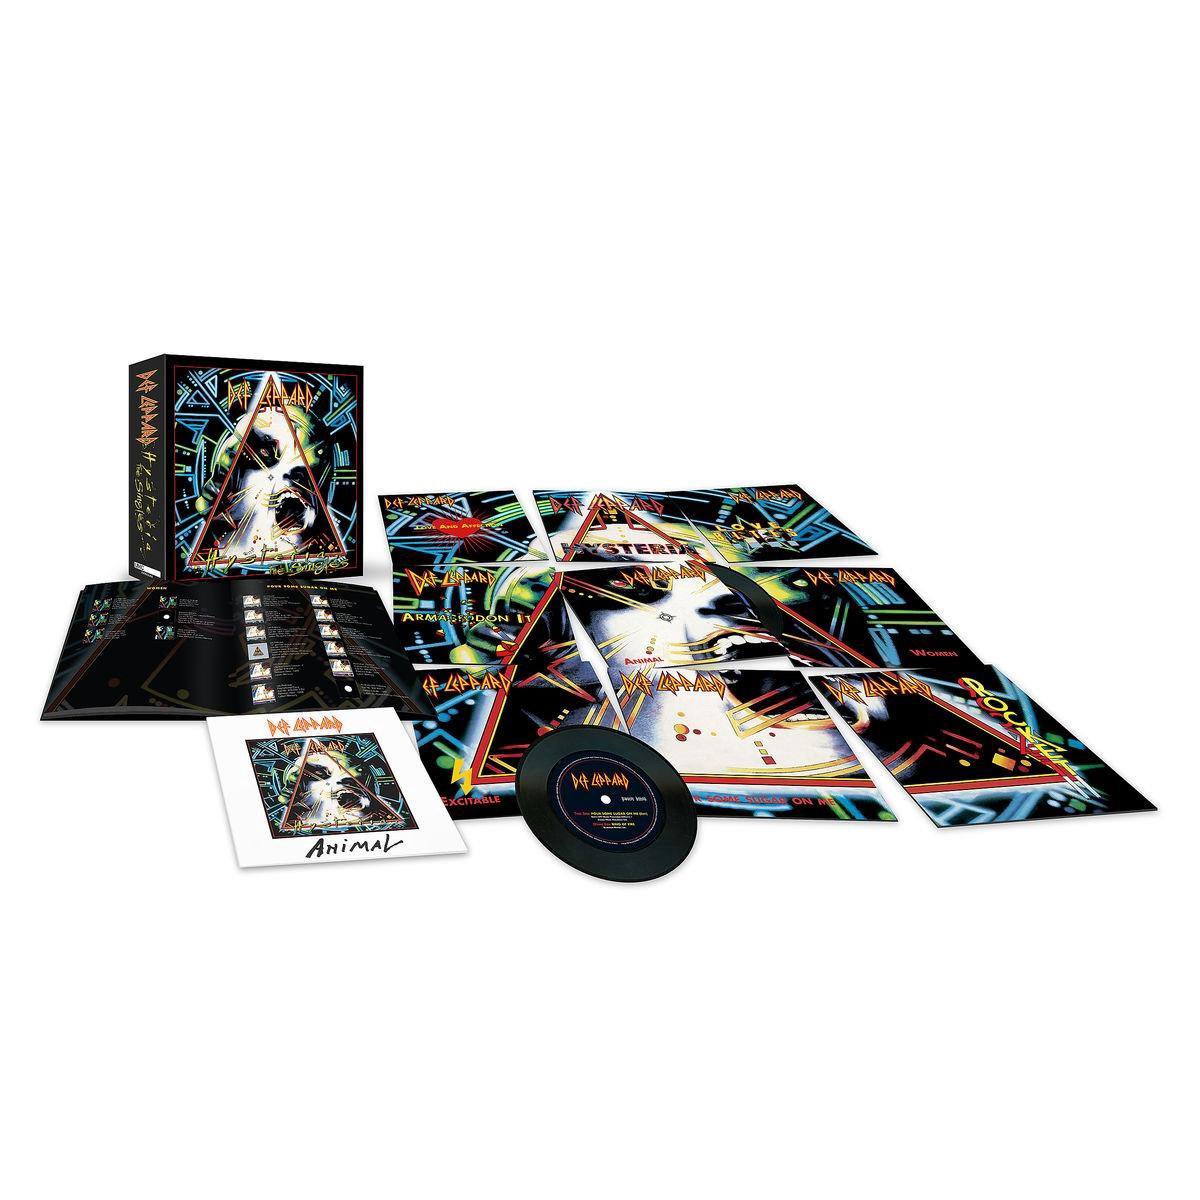 Def Leppard Hysteria The Singles 7" Singles Box Set